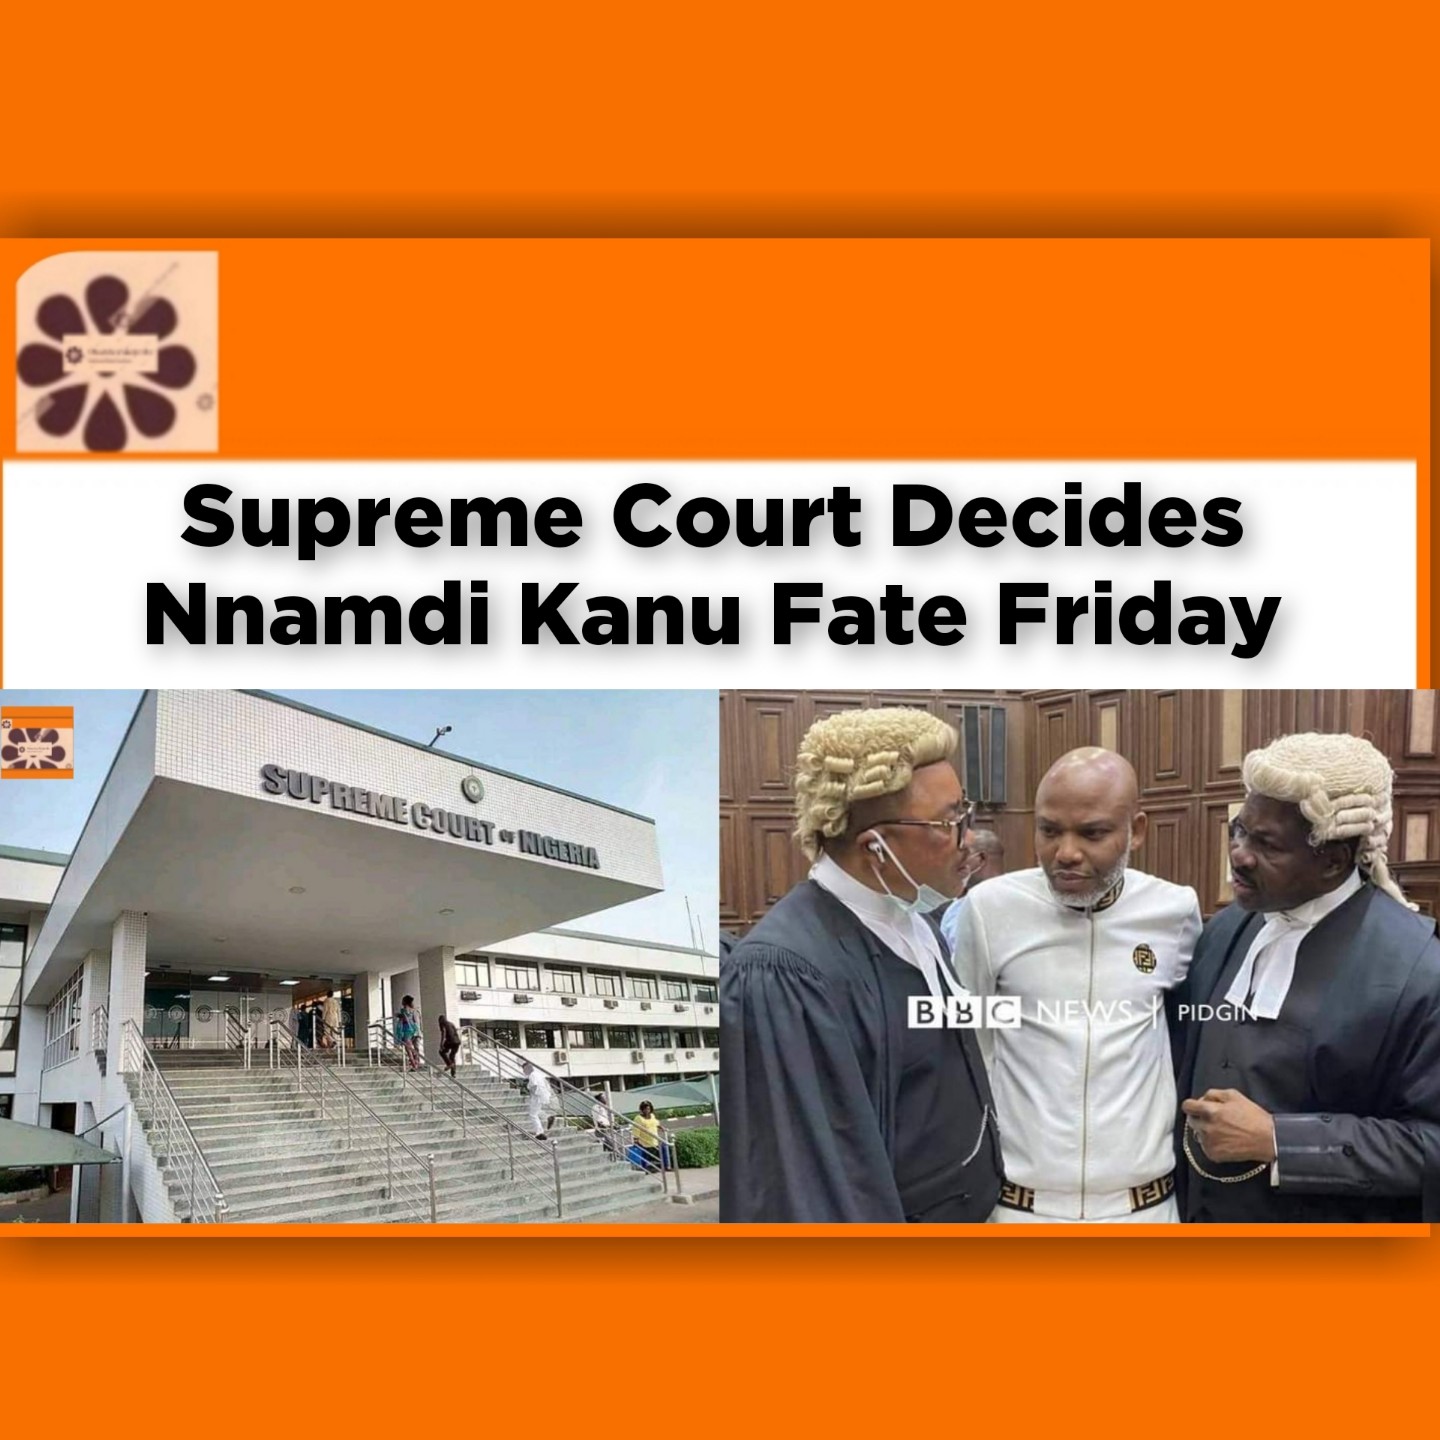 Supreme Court Decides Nnamdi Kanu Fate Friday ~ OsazuwaAkonedo #Biafra #Dss #Ejiofor #Ifeanyi #Kanu #Kenya #Nnamdi #OsazuwaAkonedo #SitAtHome #Southeast #SupremeCourt